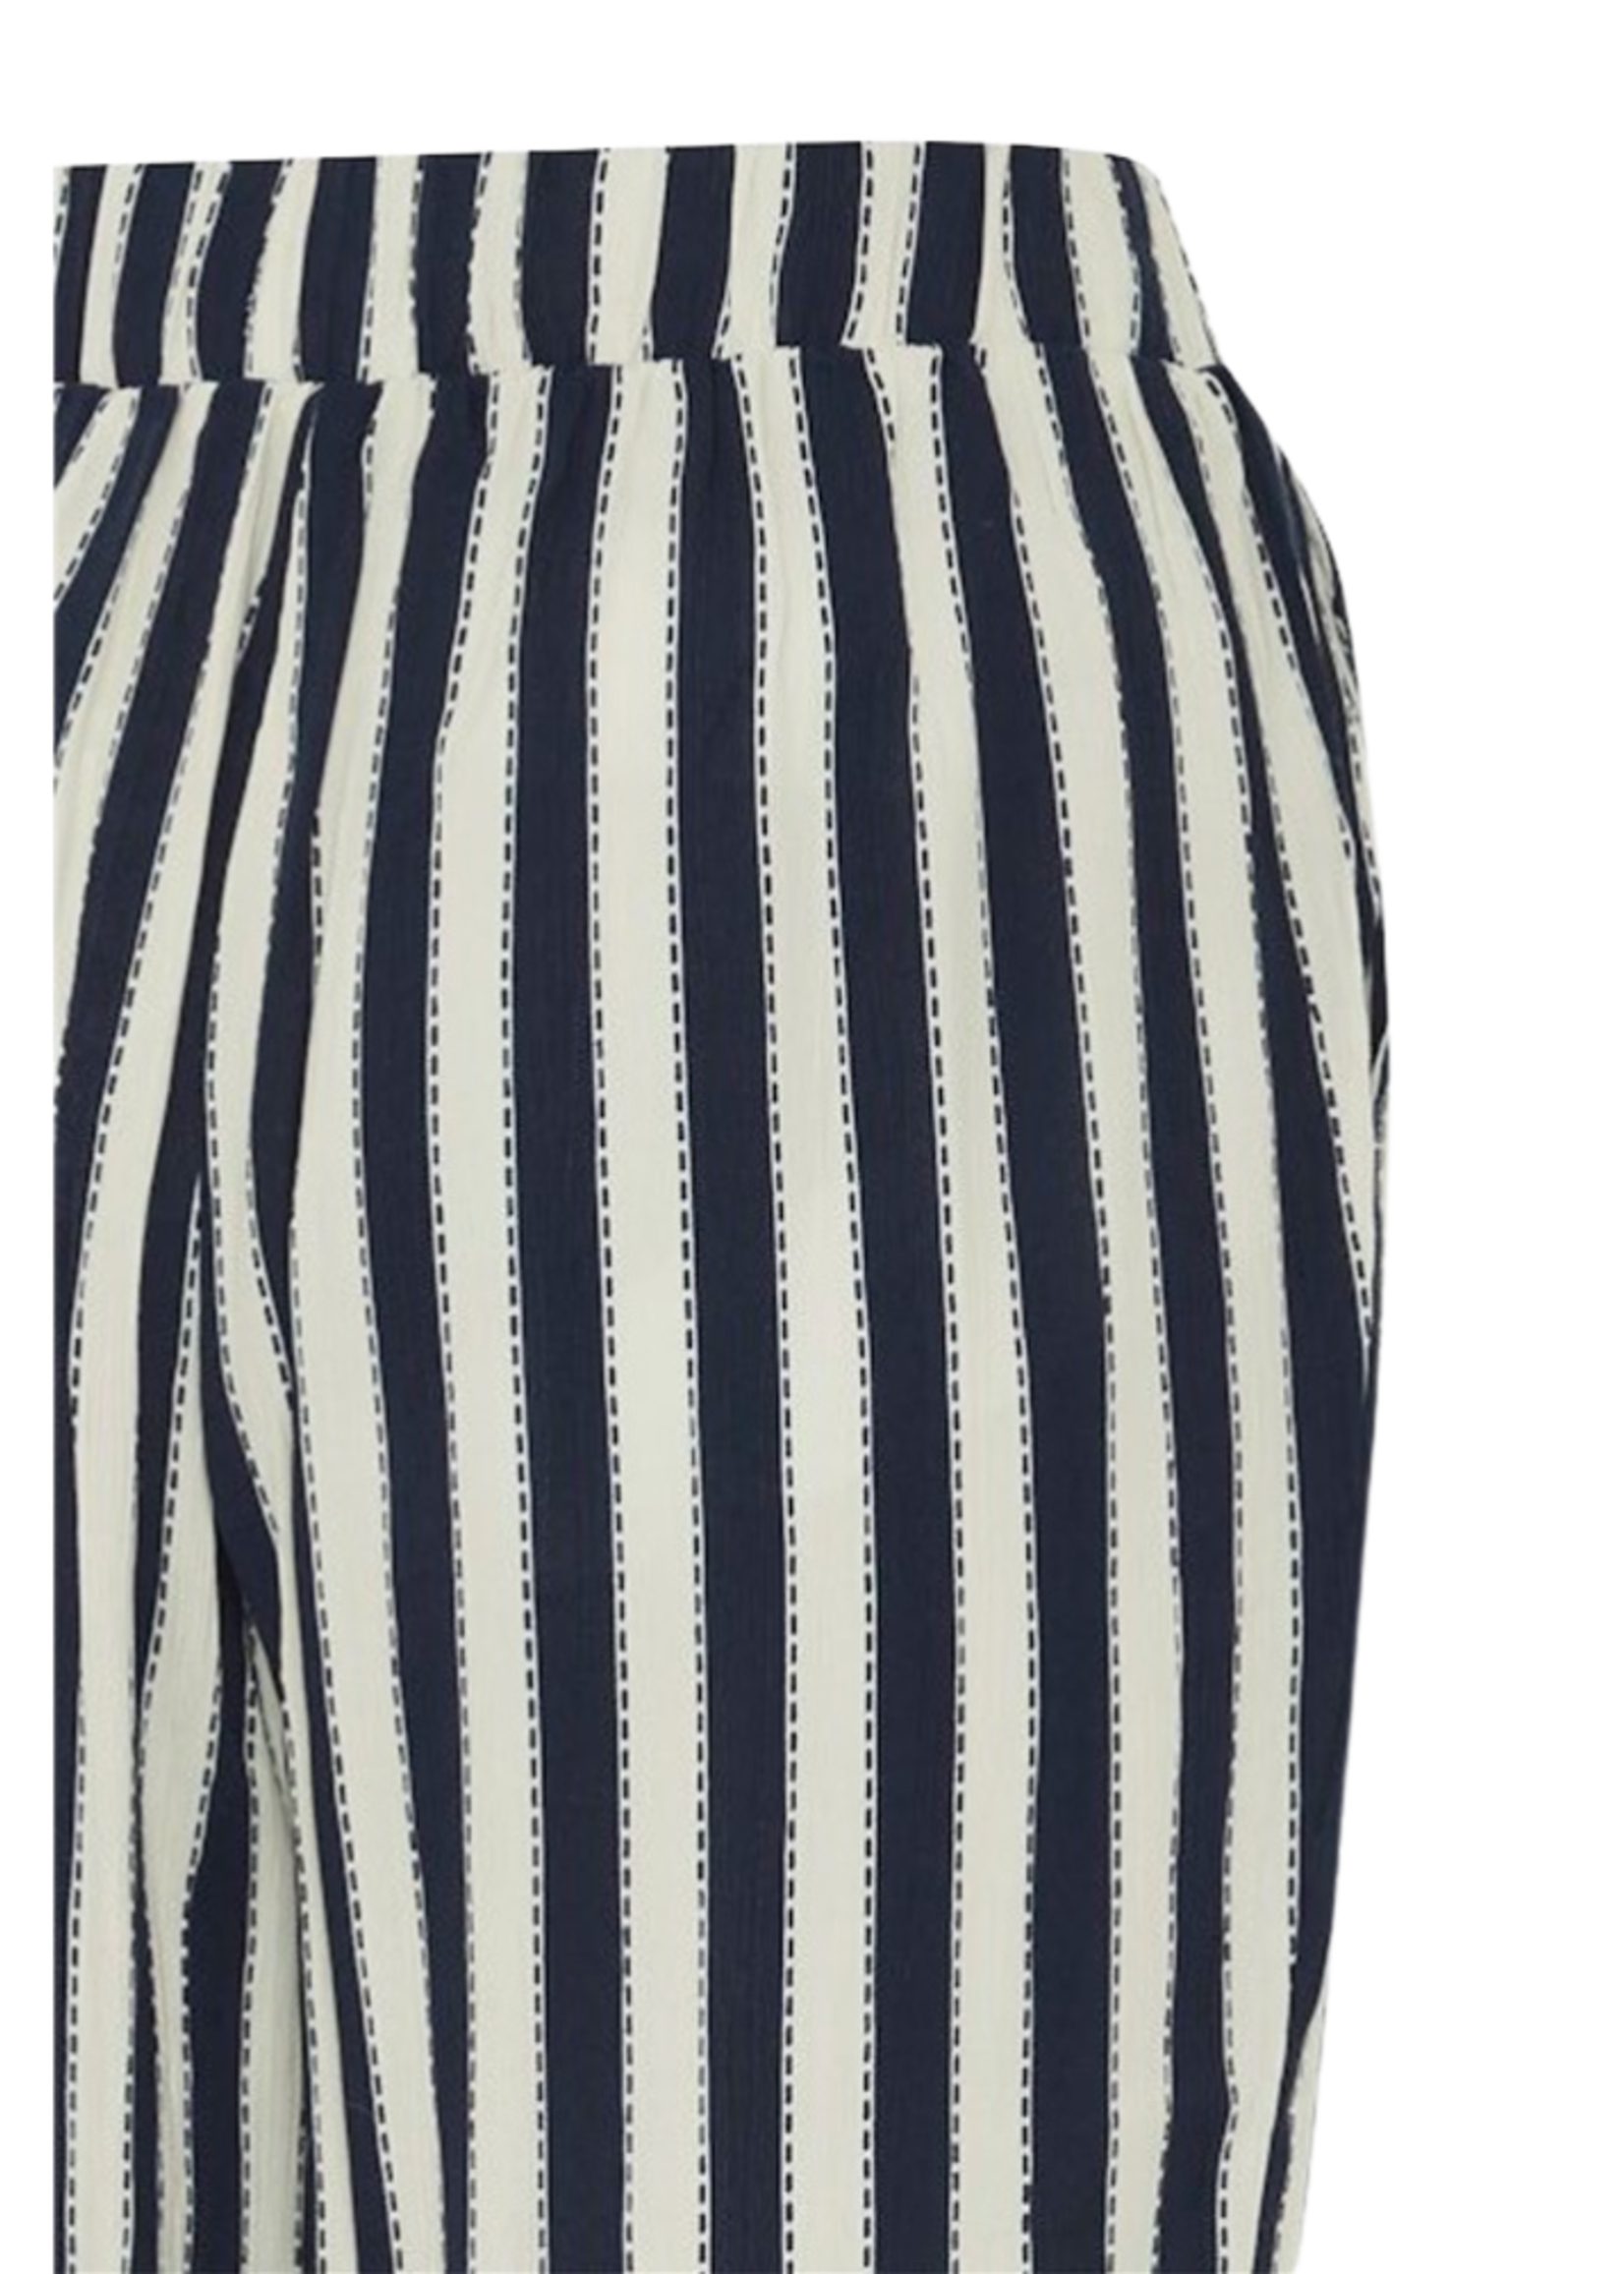 ICHI Ihmarrakech pants 6 Stripe